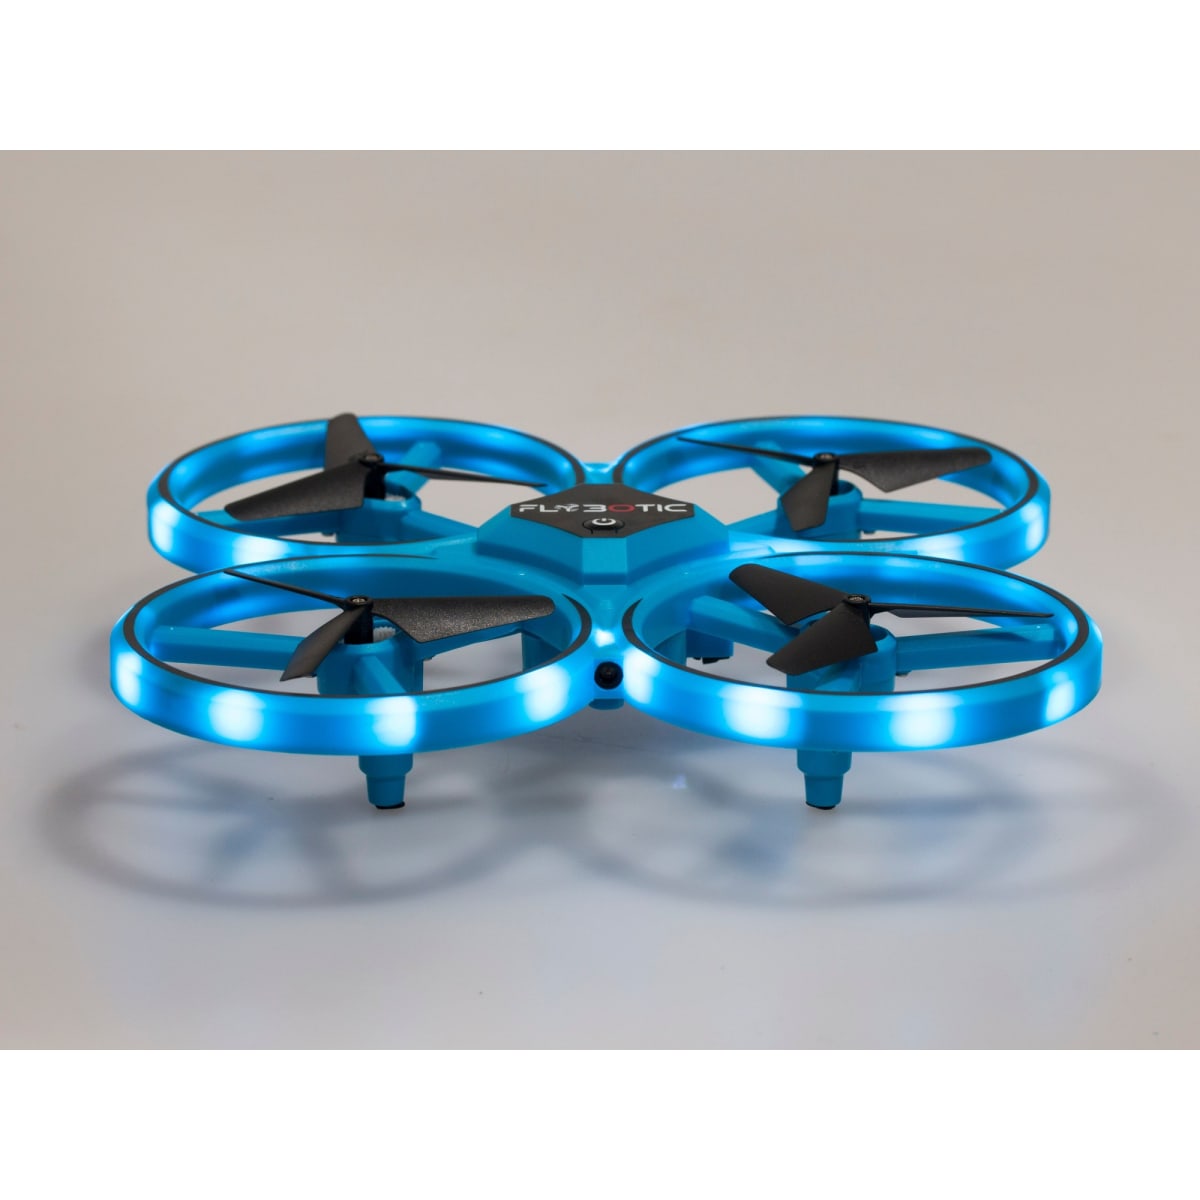 Silverlit - Flashing Drone Flybotic